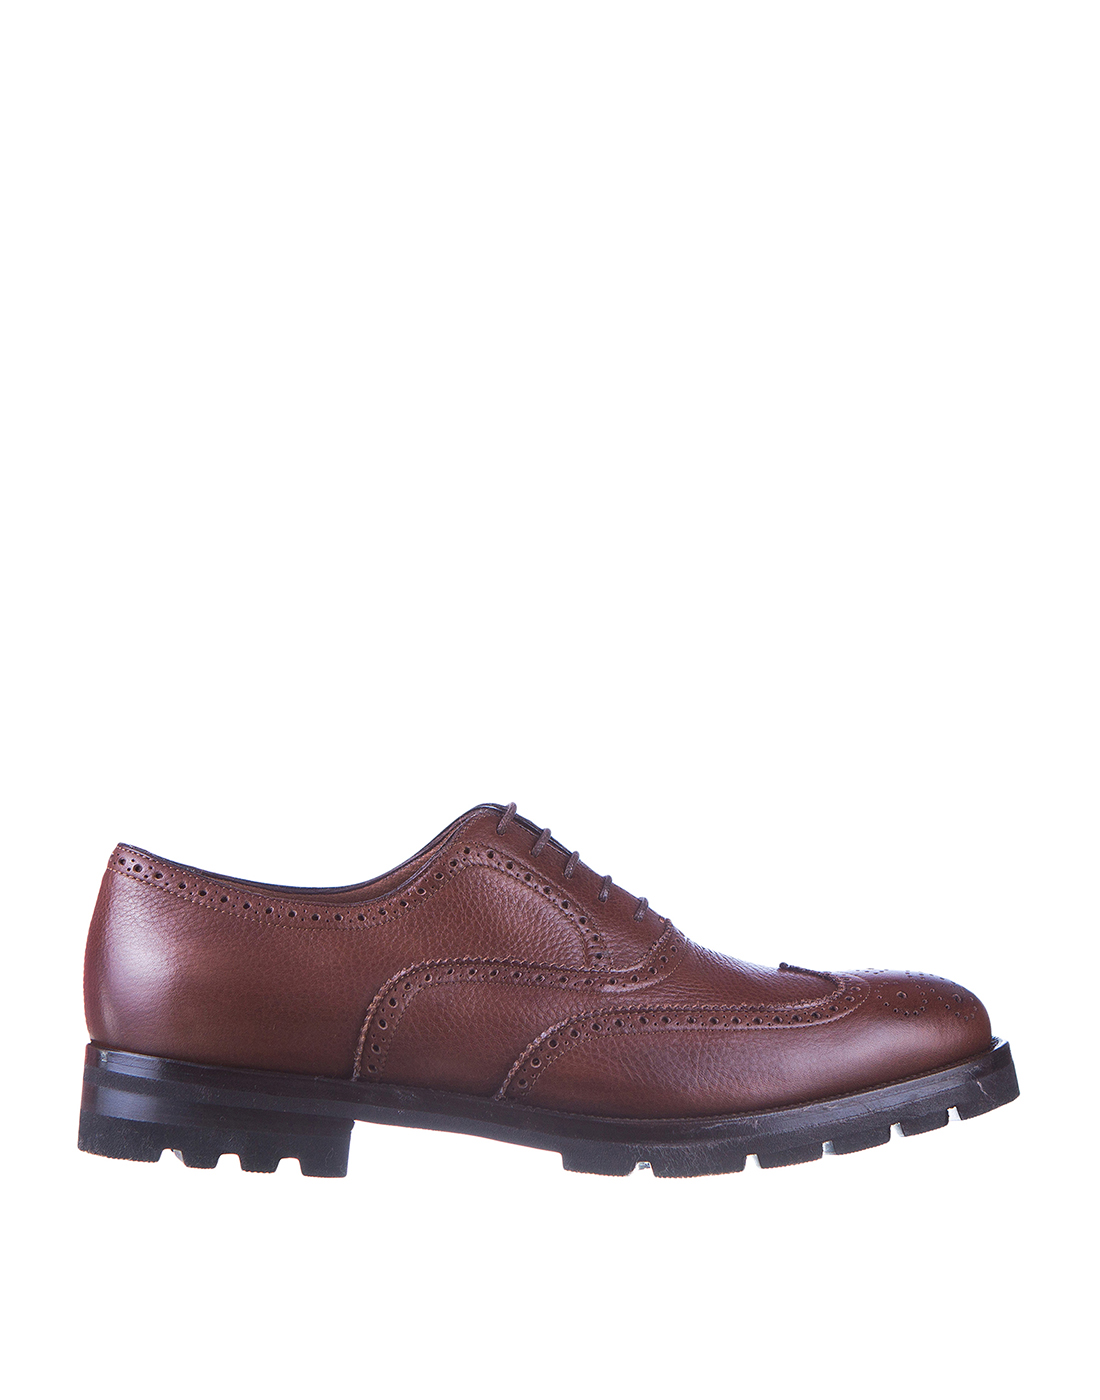 Туфли коричневые мужские Fratelli Rossetti S14179-1